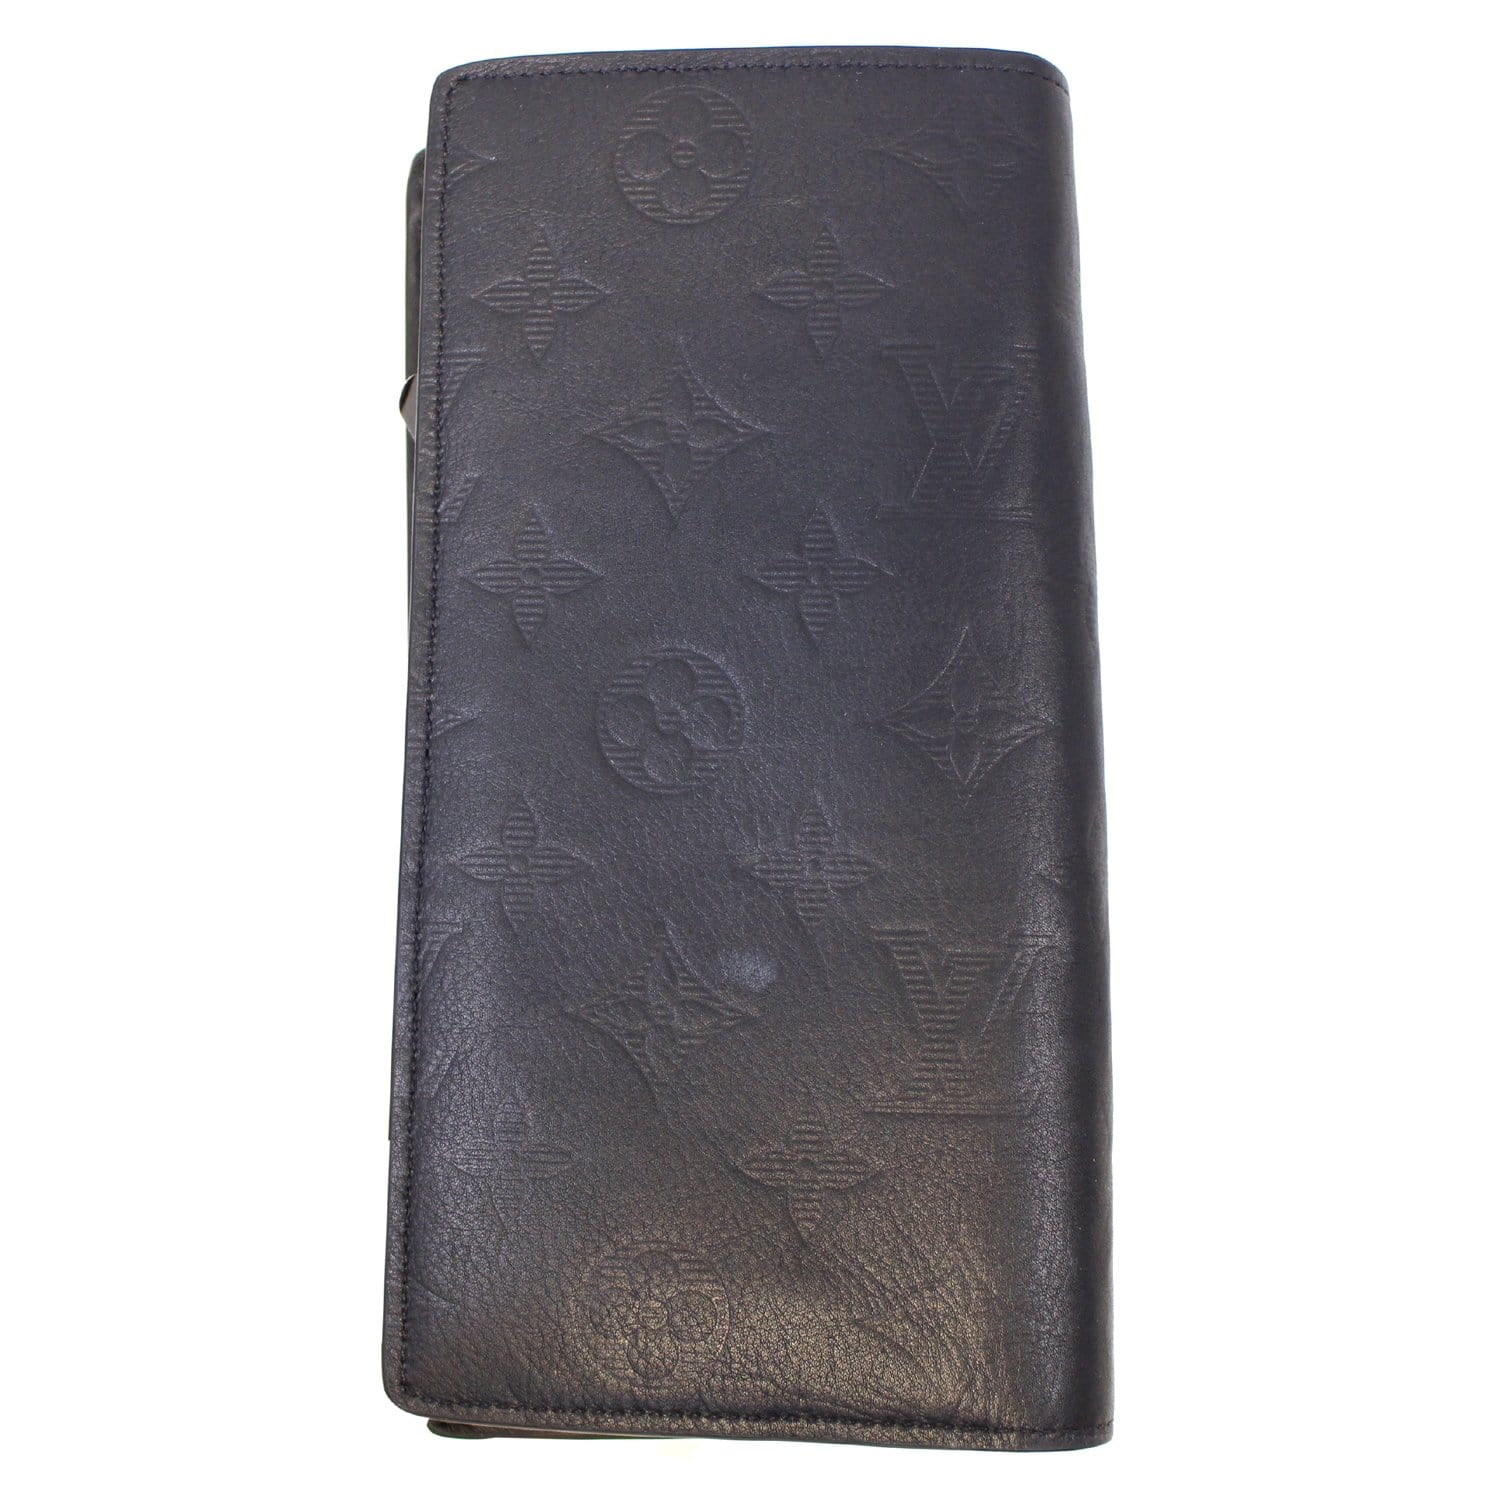 Brazza Wallet Monogram Shadow Leather